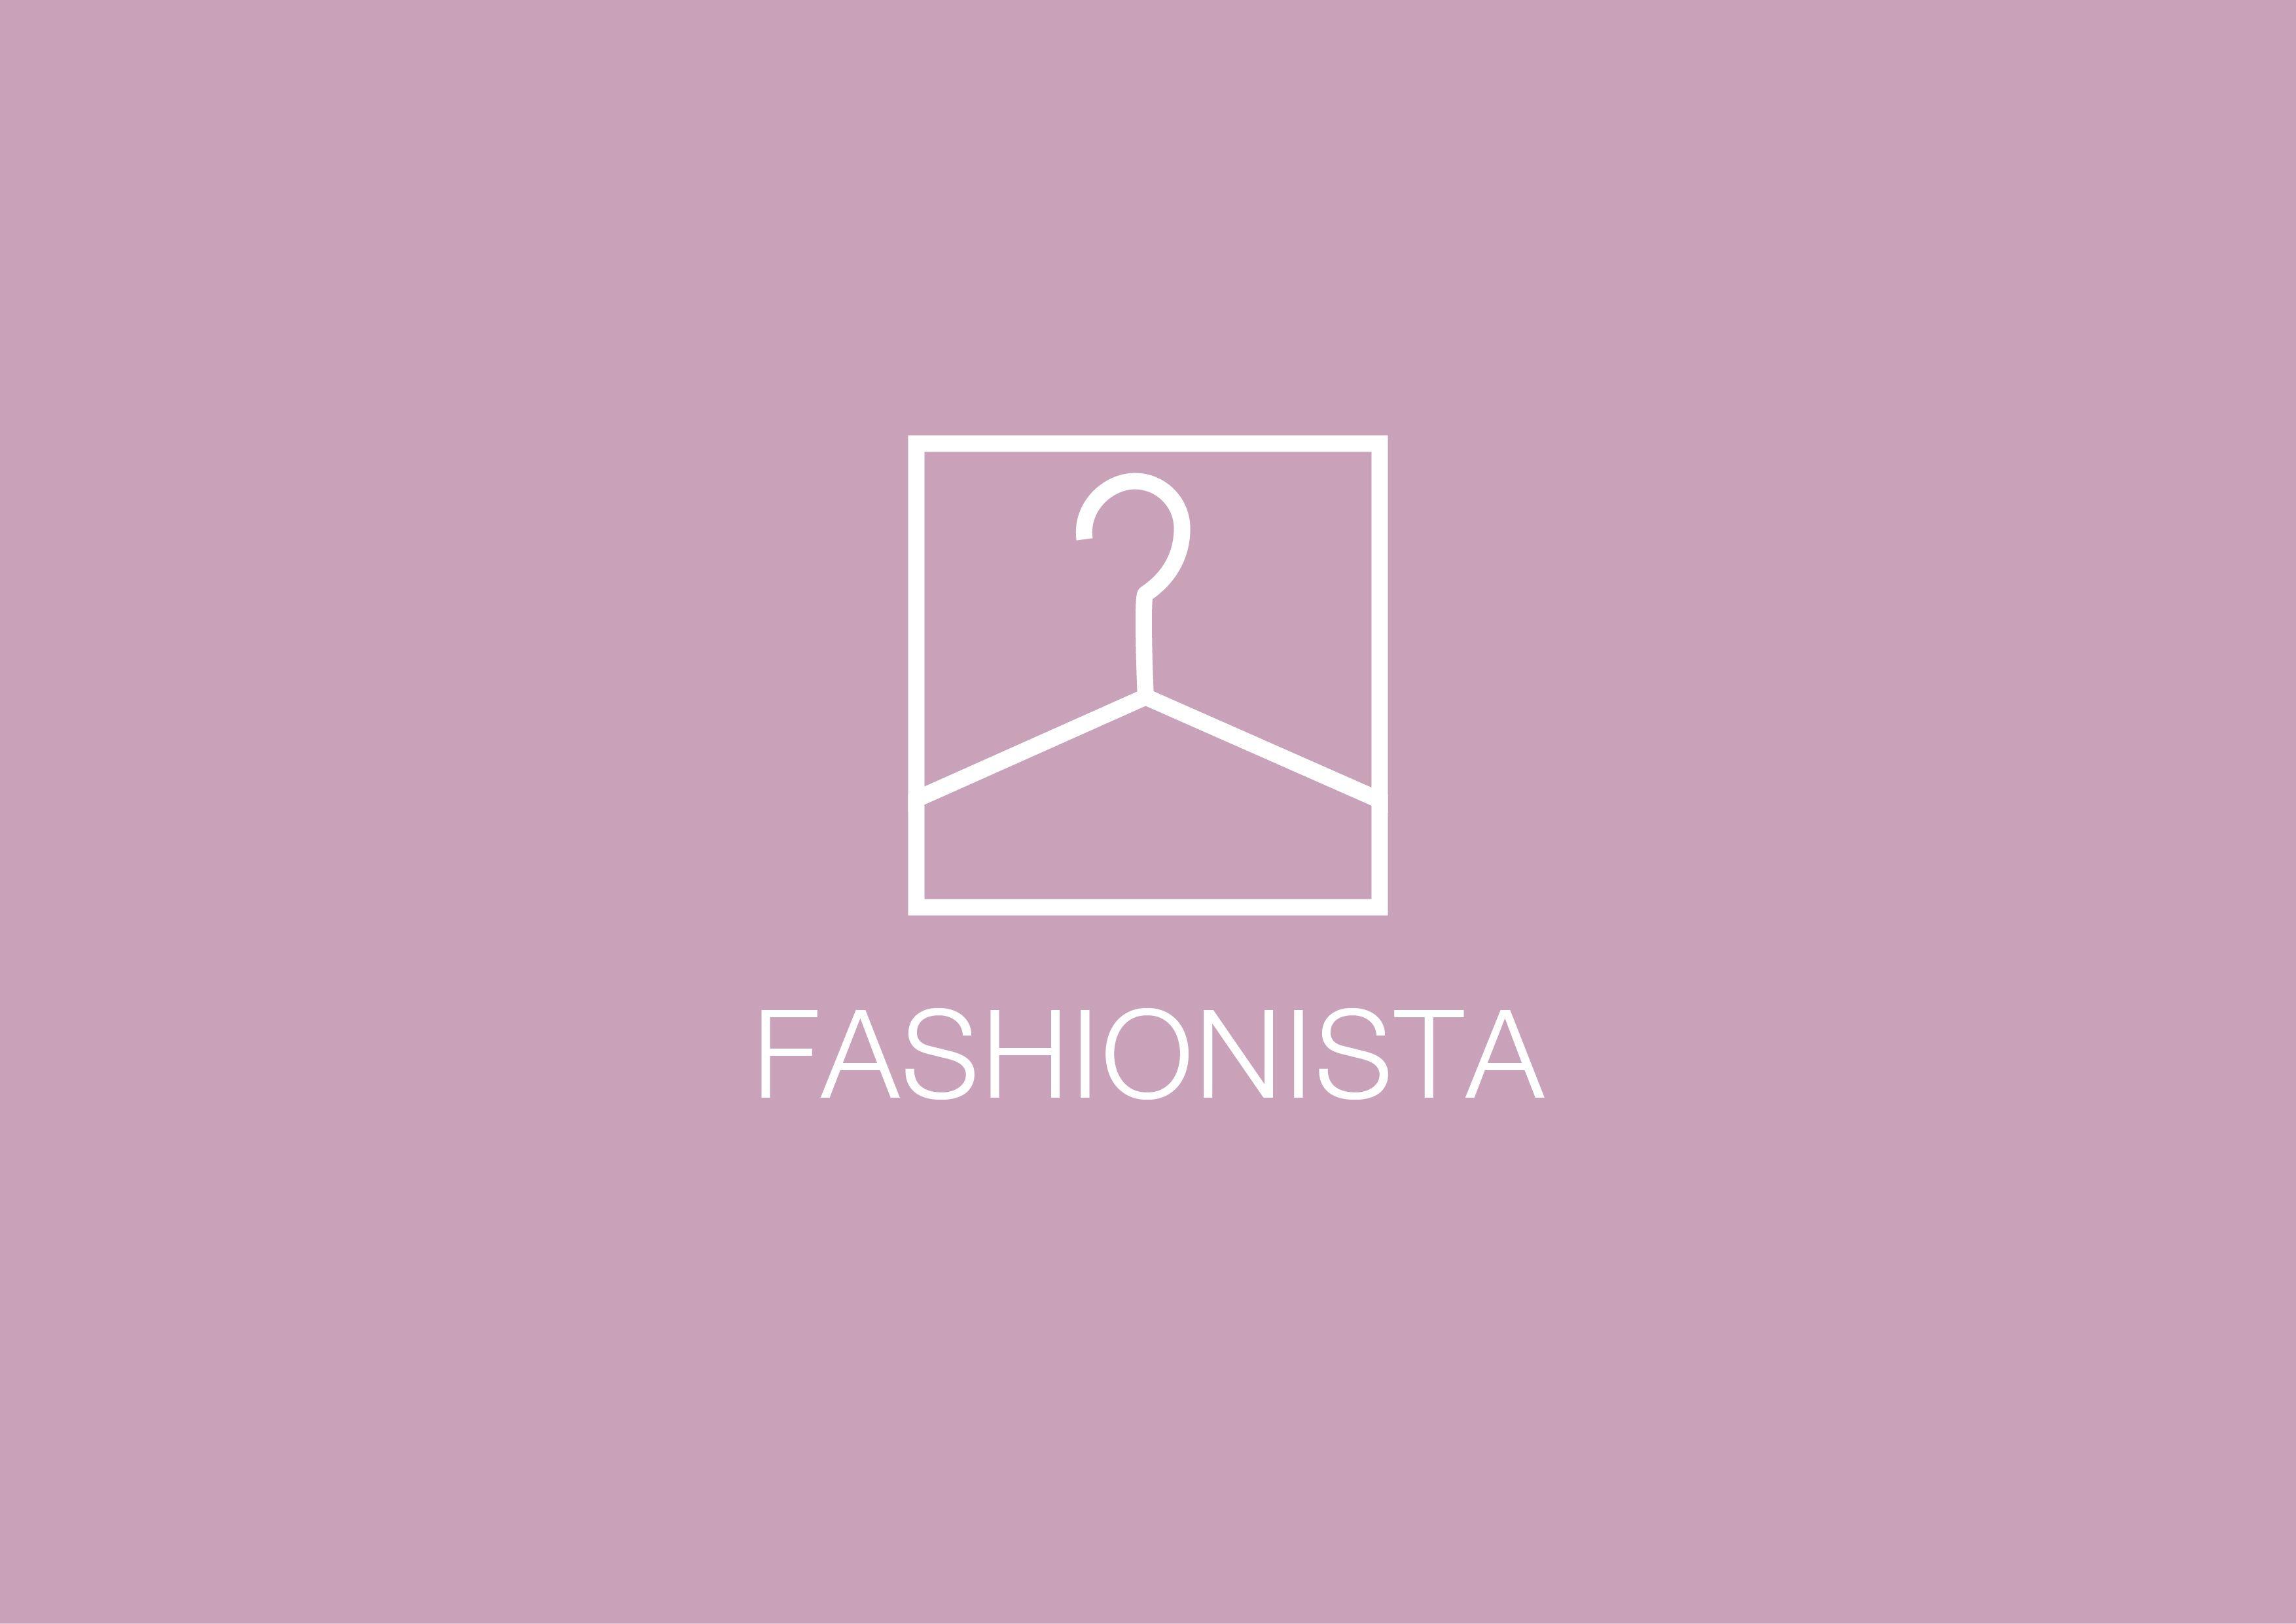 Fashionista Logo - Logo Design Challenge. Fashionista is a women's fashion app that